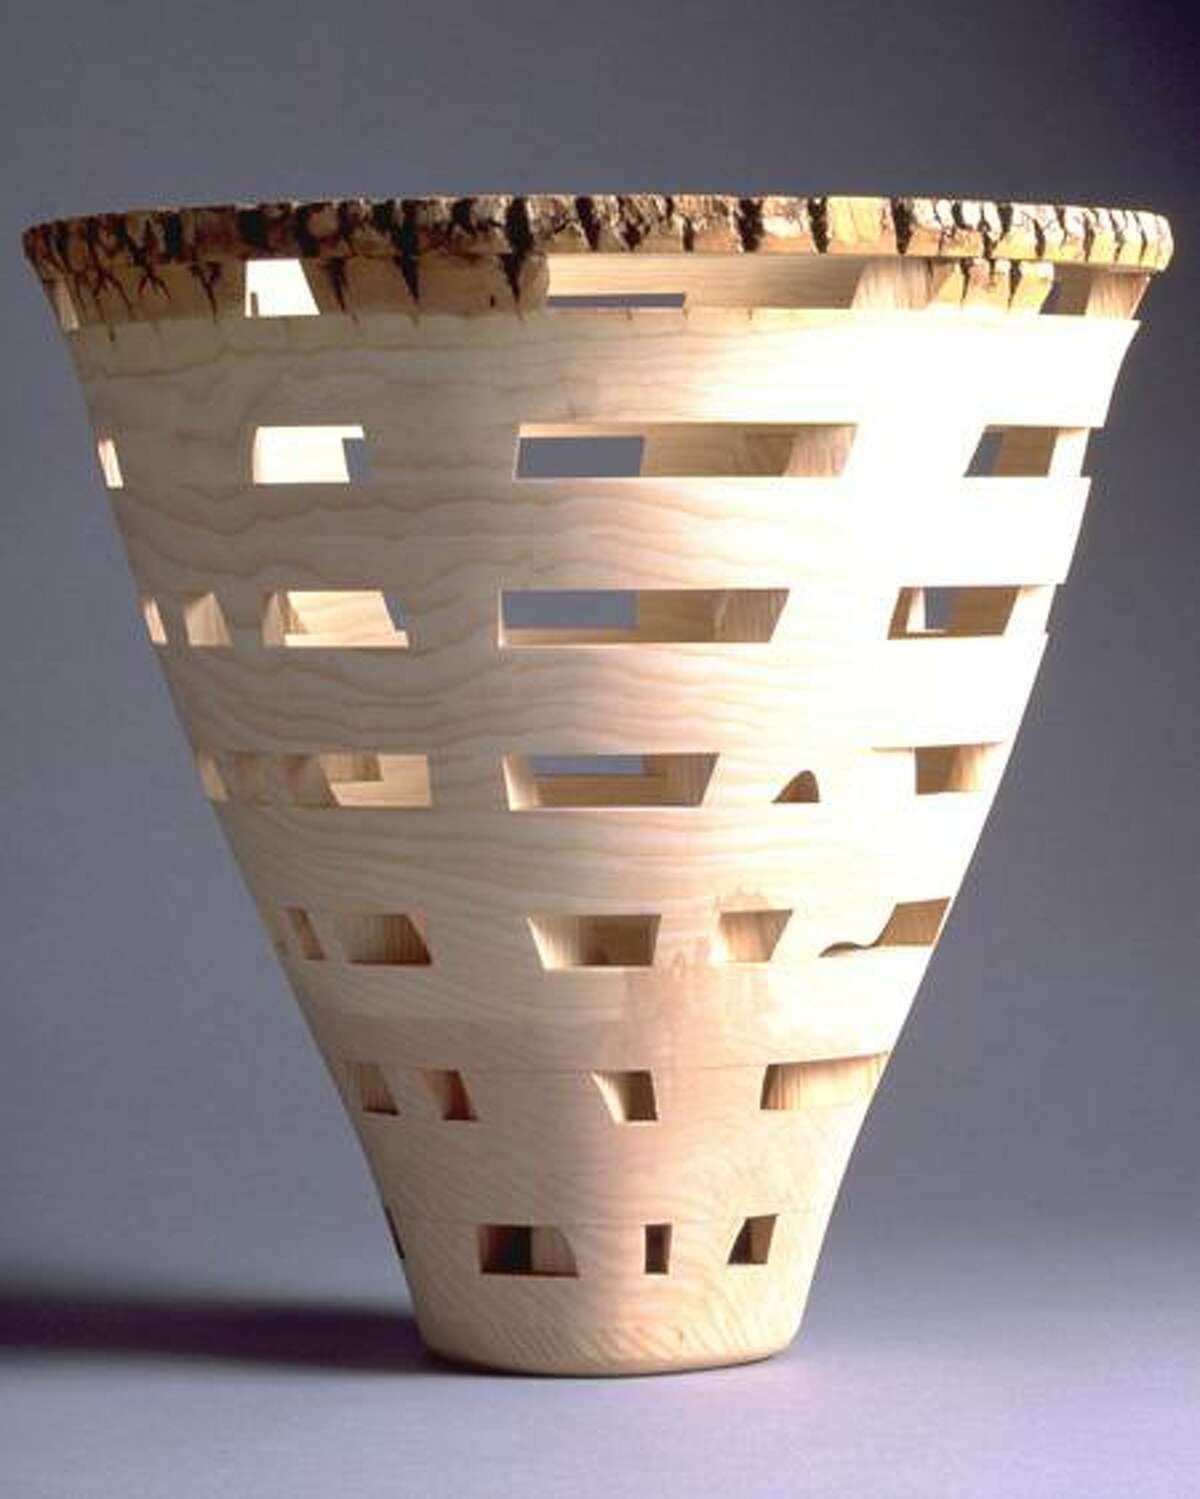 A laminated wood vessel by Oxford artist Peter Petrochko.